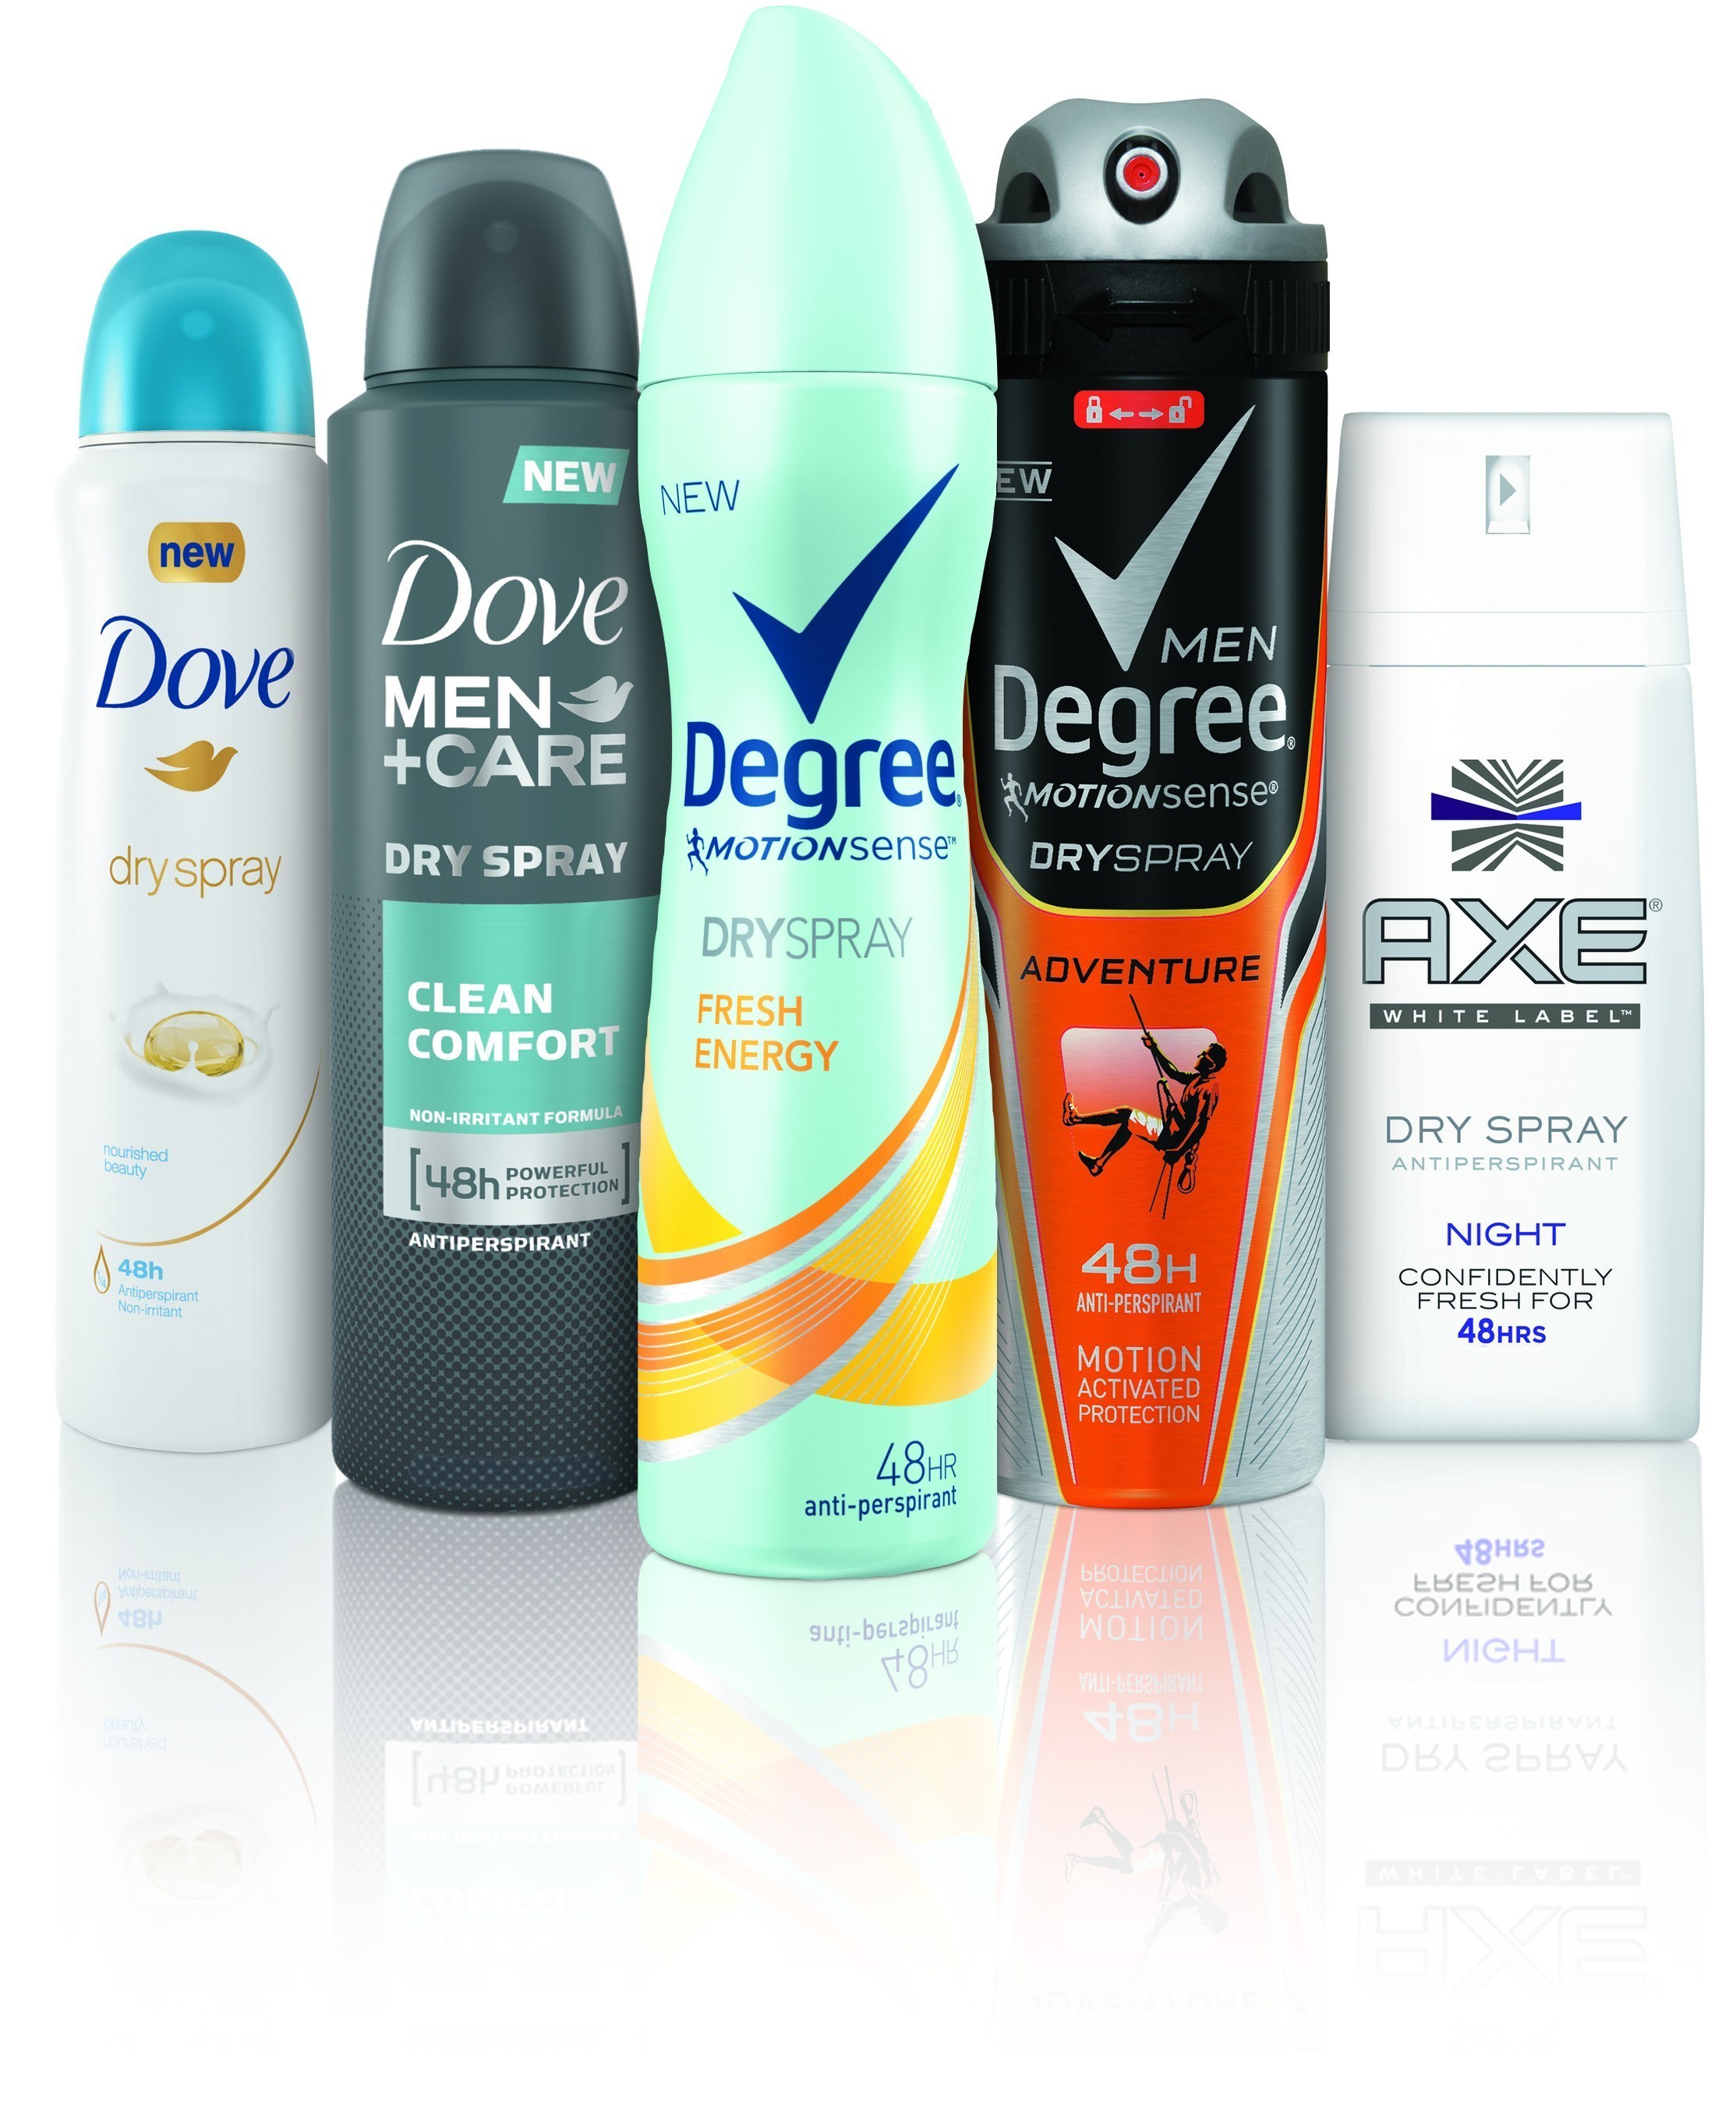 Unilever, The Global Leader In Deodorant, Launches Revolutionary New Dry Spray Antiperspirant In U.S.